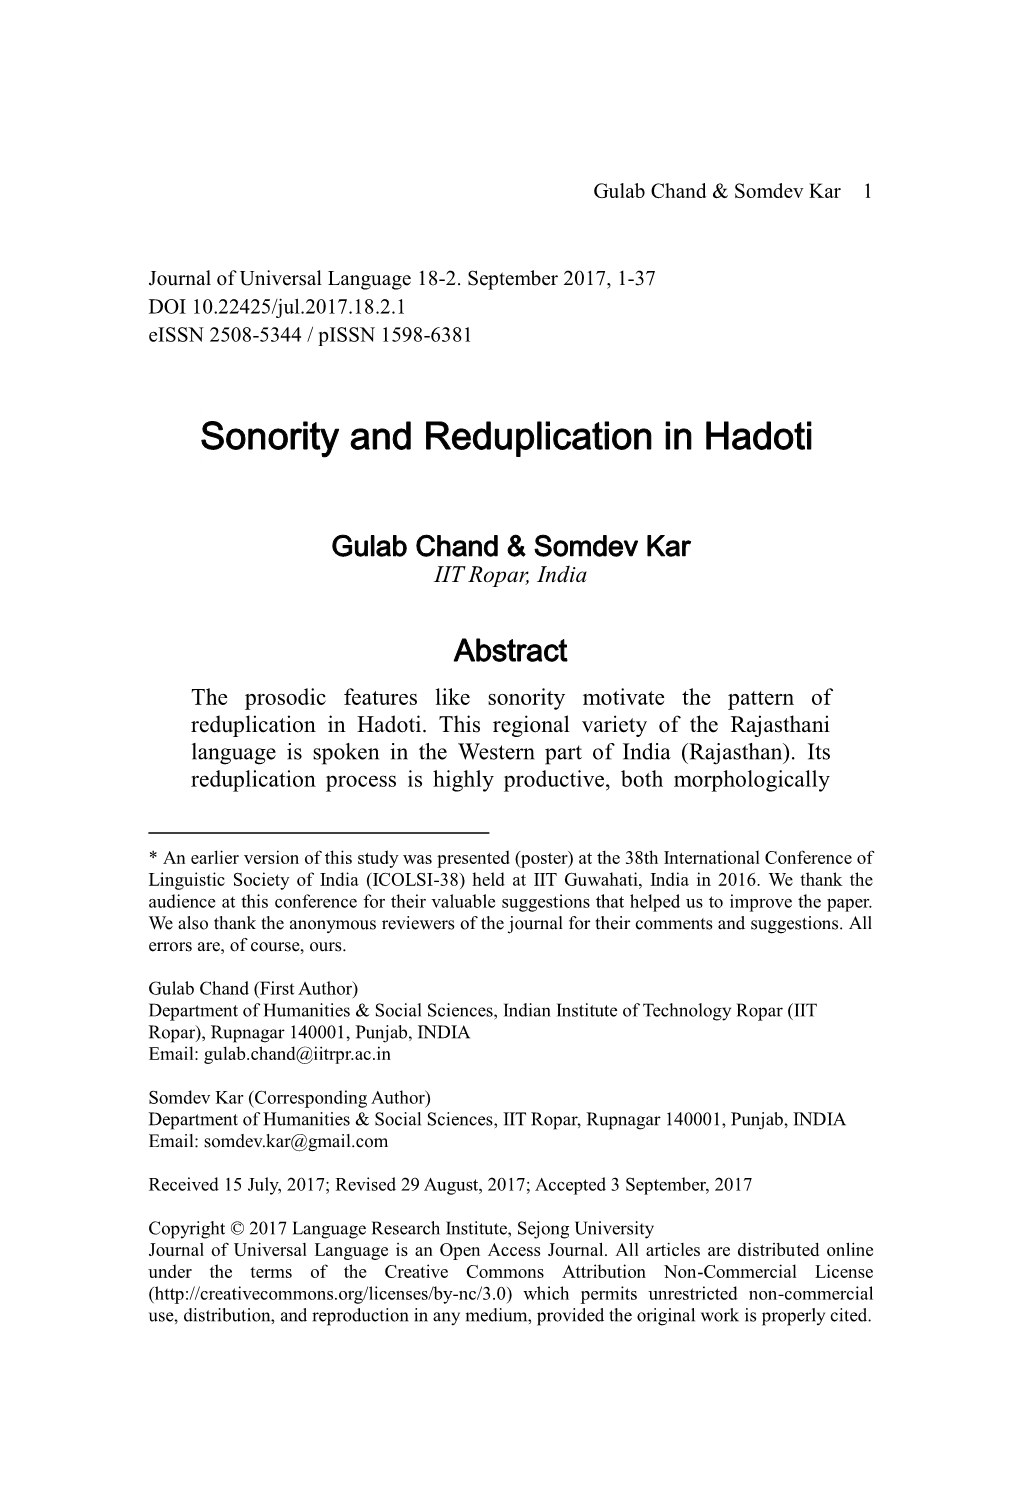 Sonority and Reduplication in Hadoti